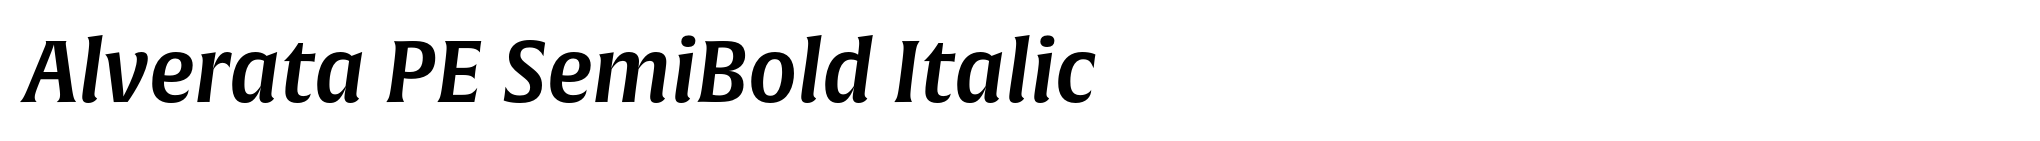 Alverata PE SemiBold Italic image